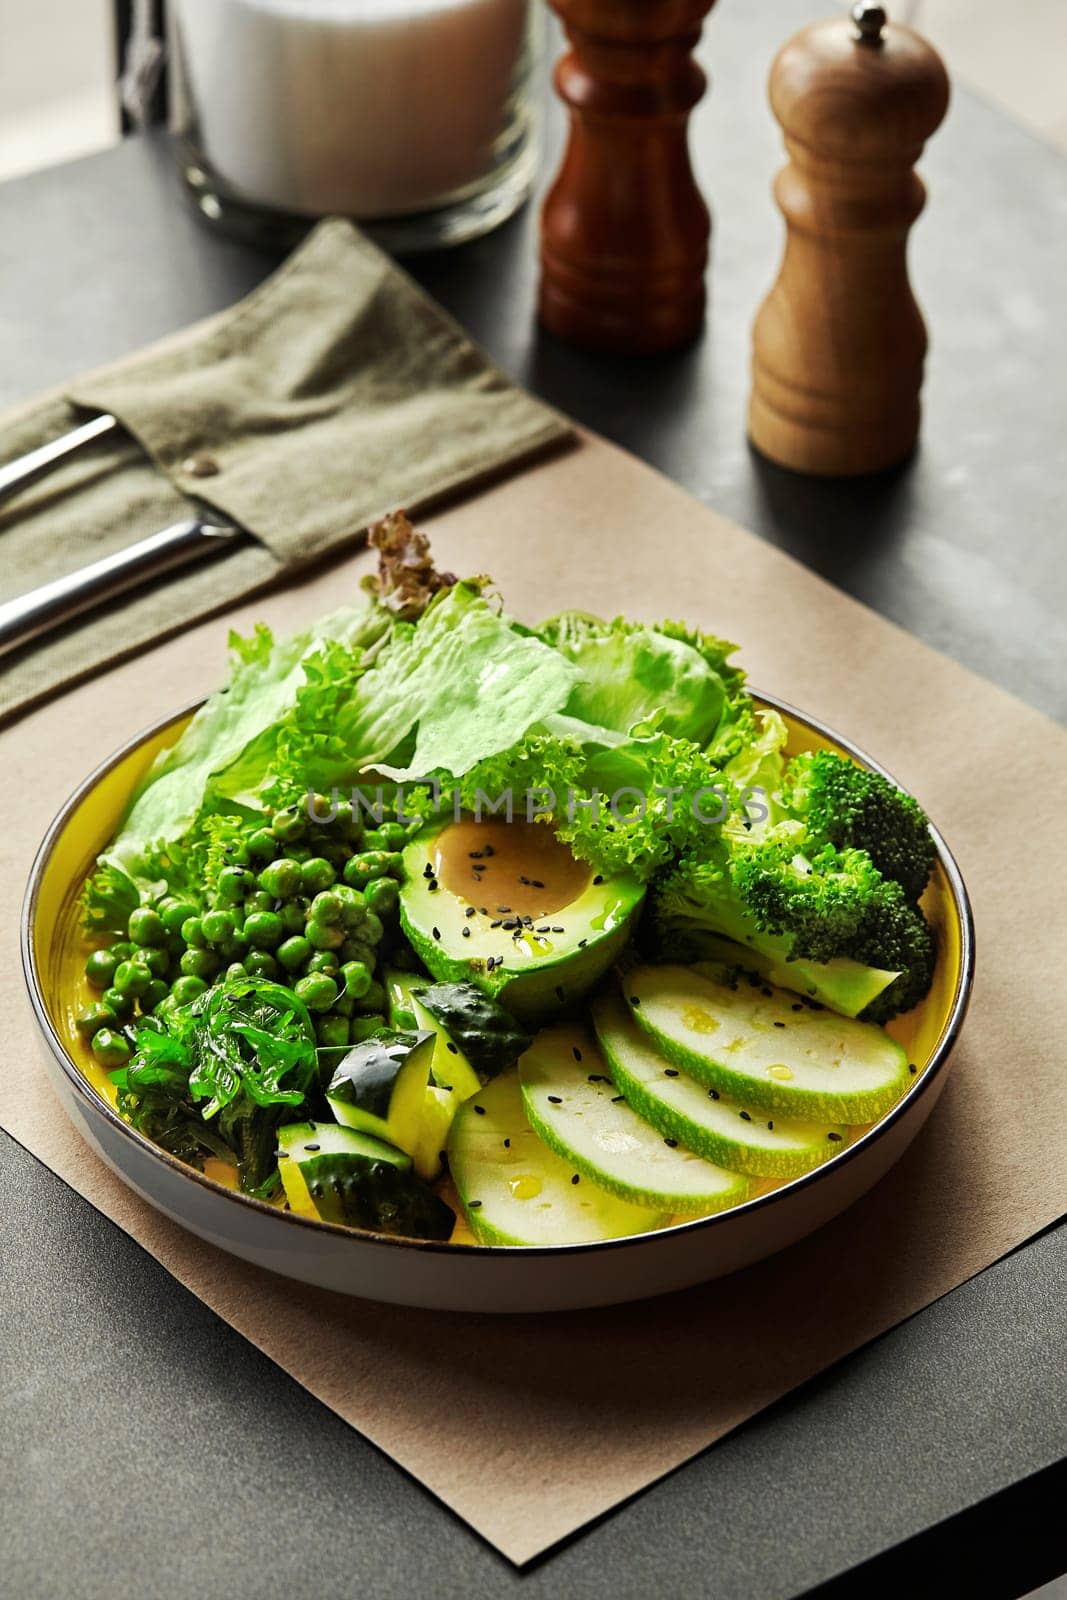 Plate of green vegan salad with fresh veggies and peanut dressing by nazarovsergey